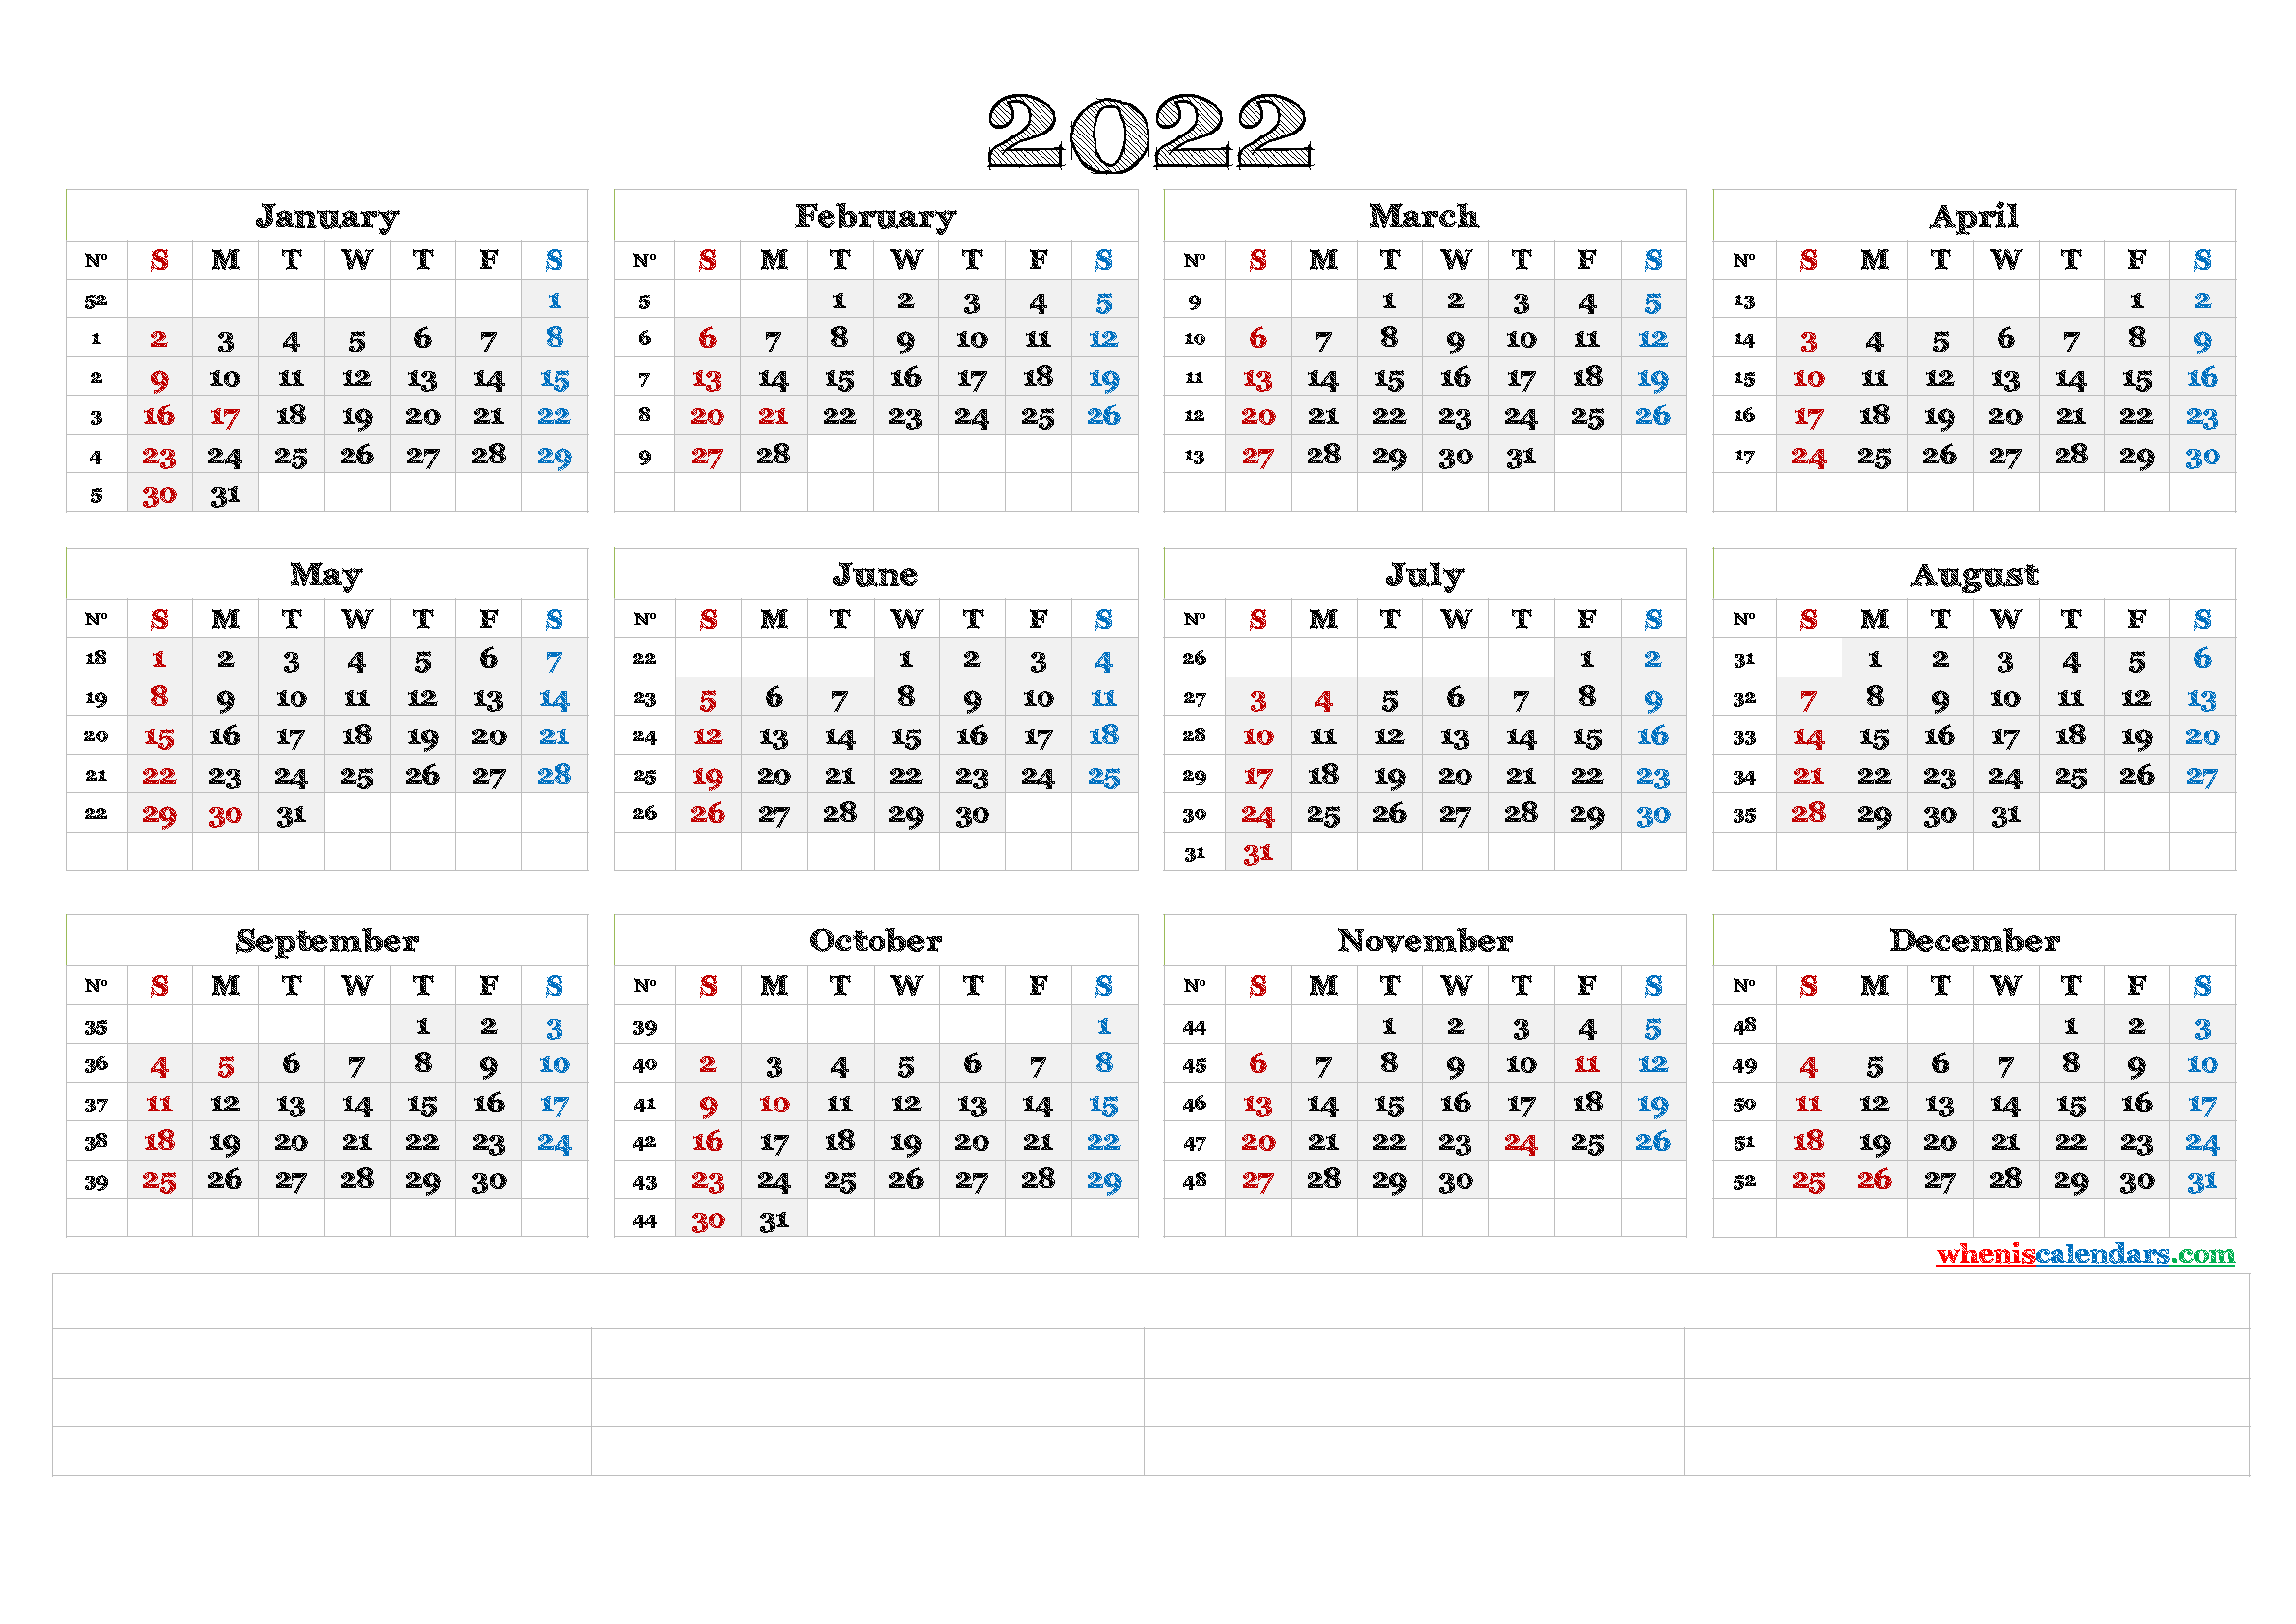 year-2022-calendars-calendar-quickly-2022-printable-calendars-images